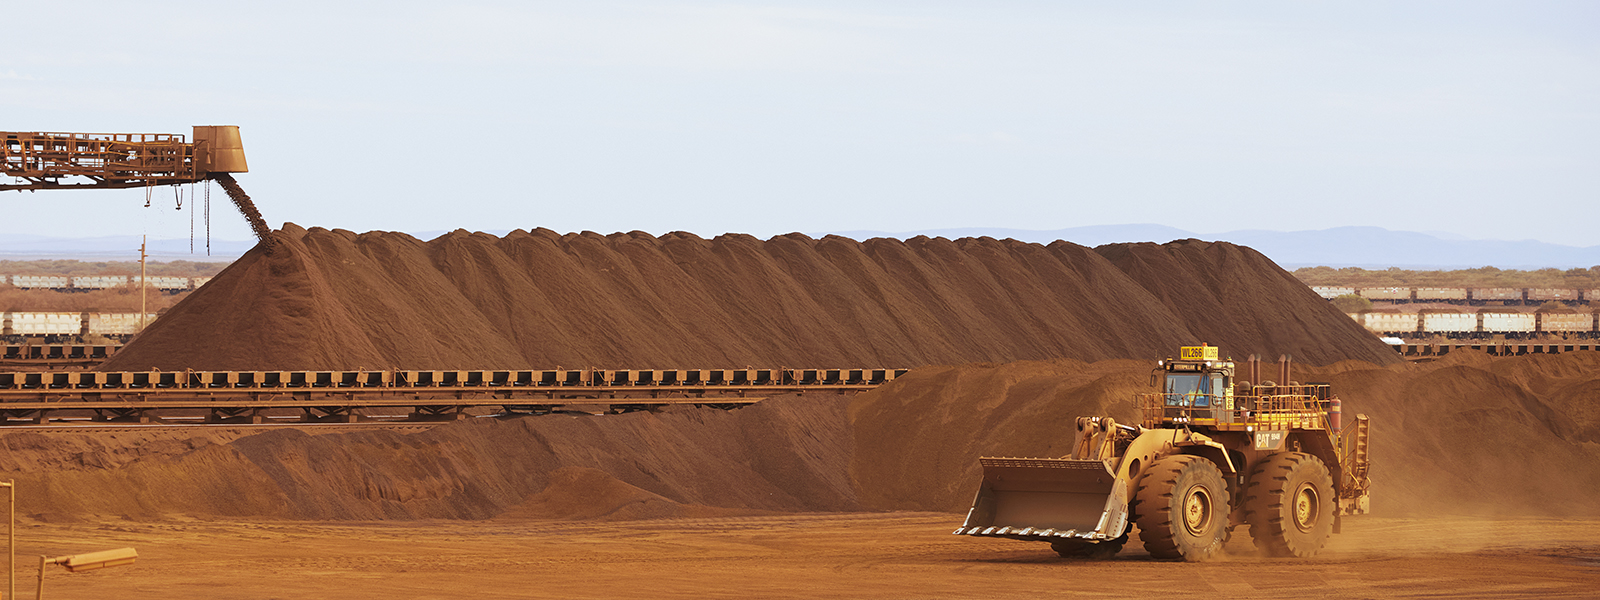 Citi raises iron ore price forecast to $140 on China stimulus